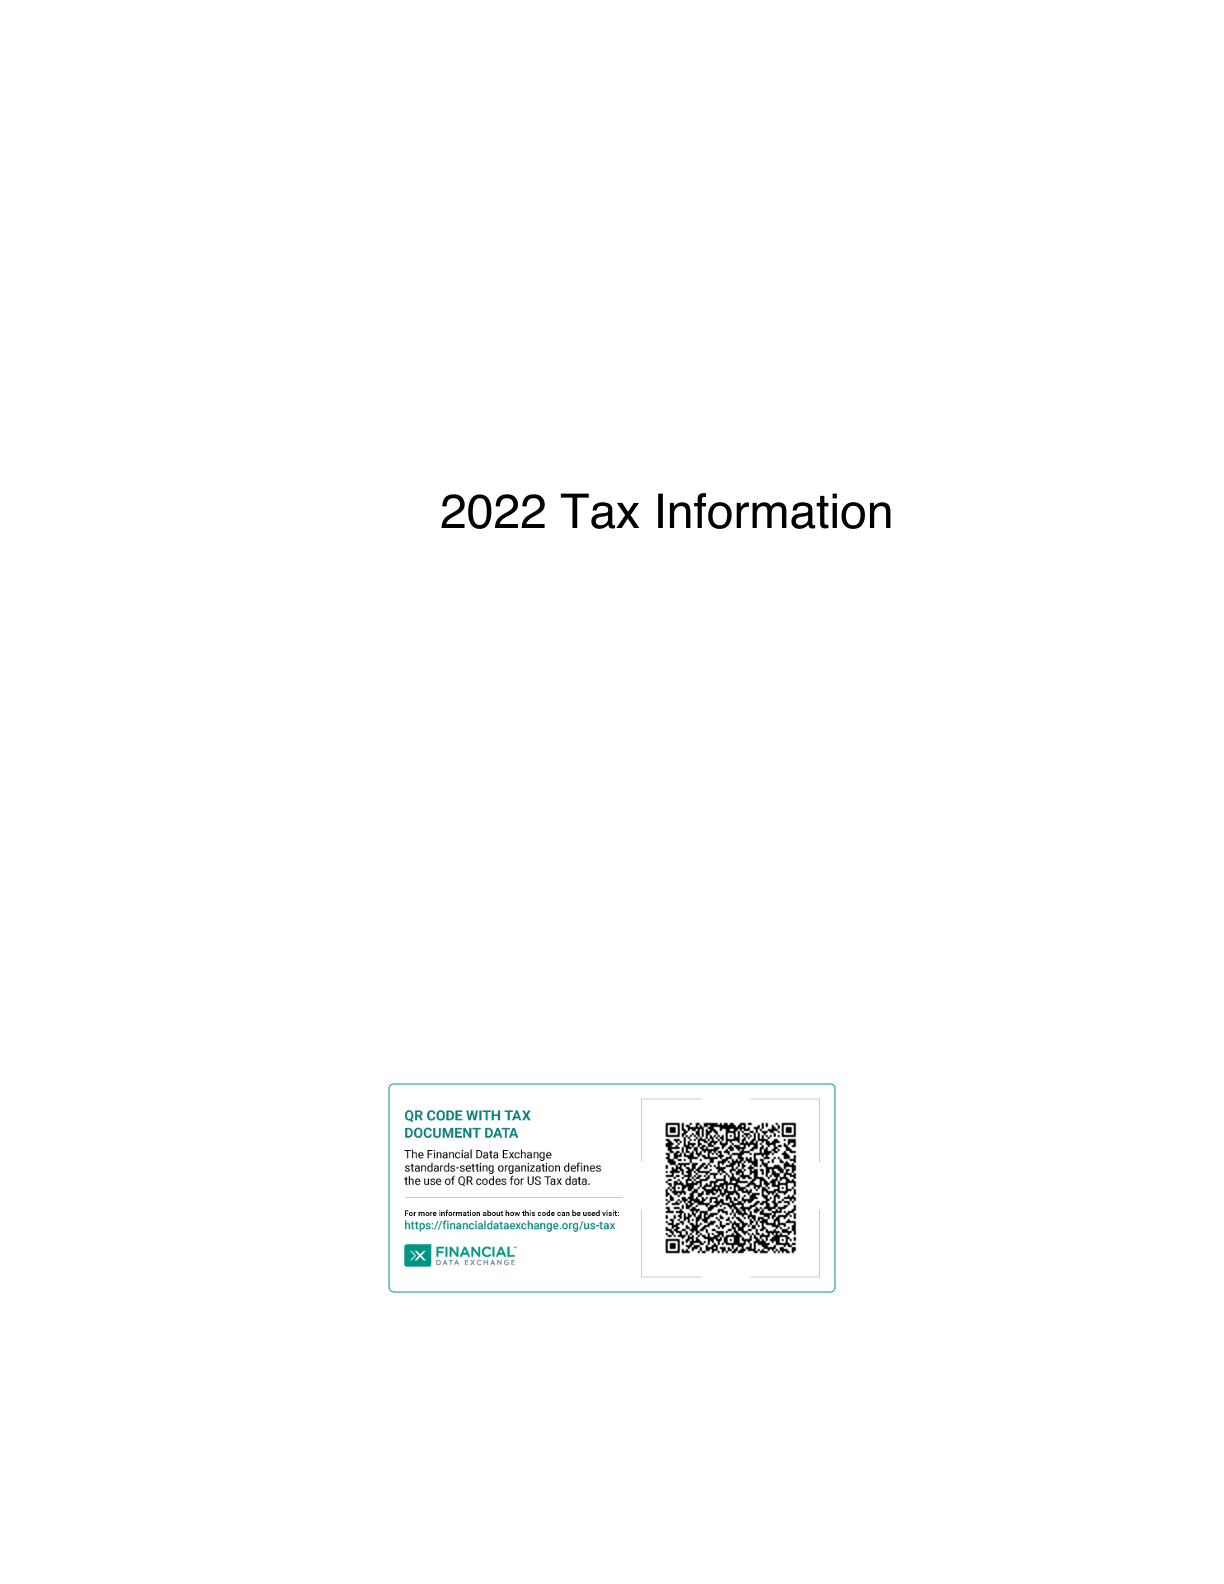 /img/forms/TaxW2C/2022/v5.0/TaxW2C.RecordsCopy.qr.png